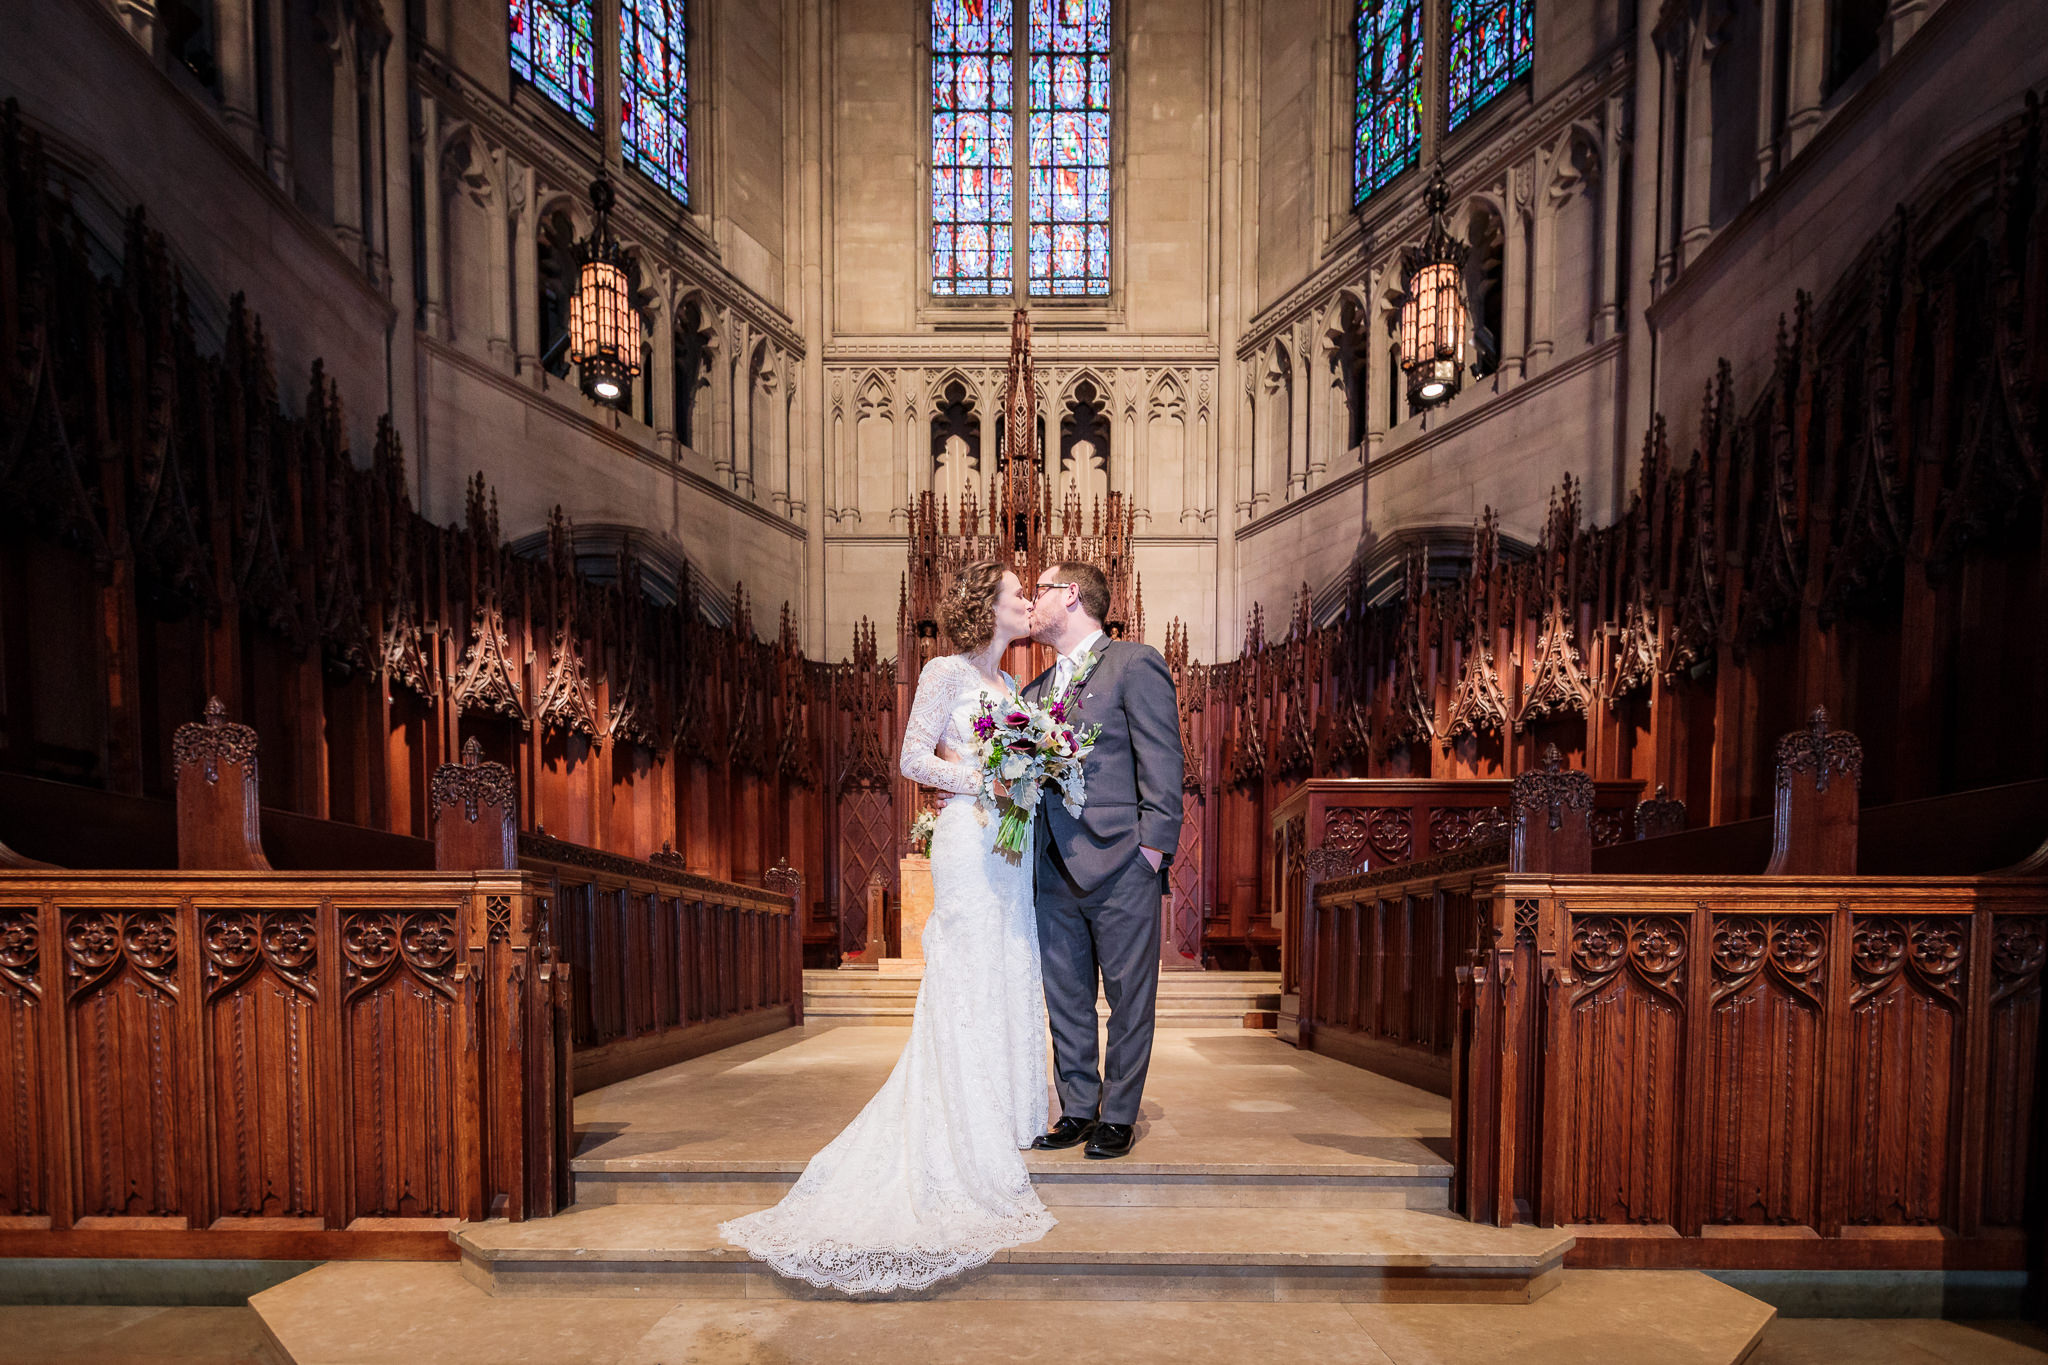 Bride & groom kiss on the altar of Heinz Chapel in Pittsburgh